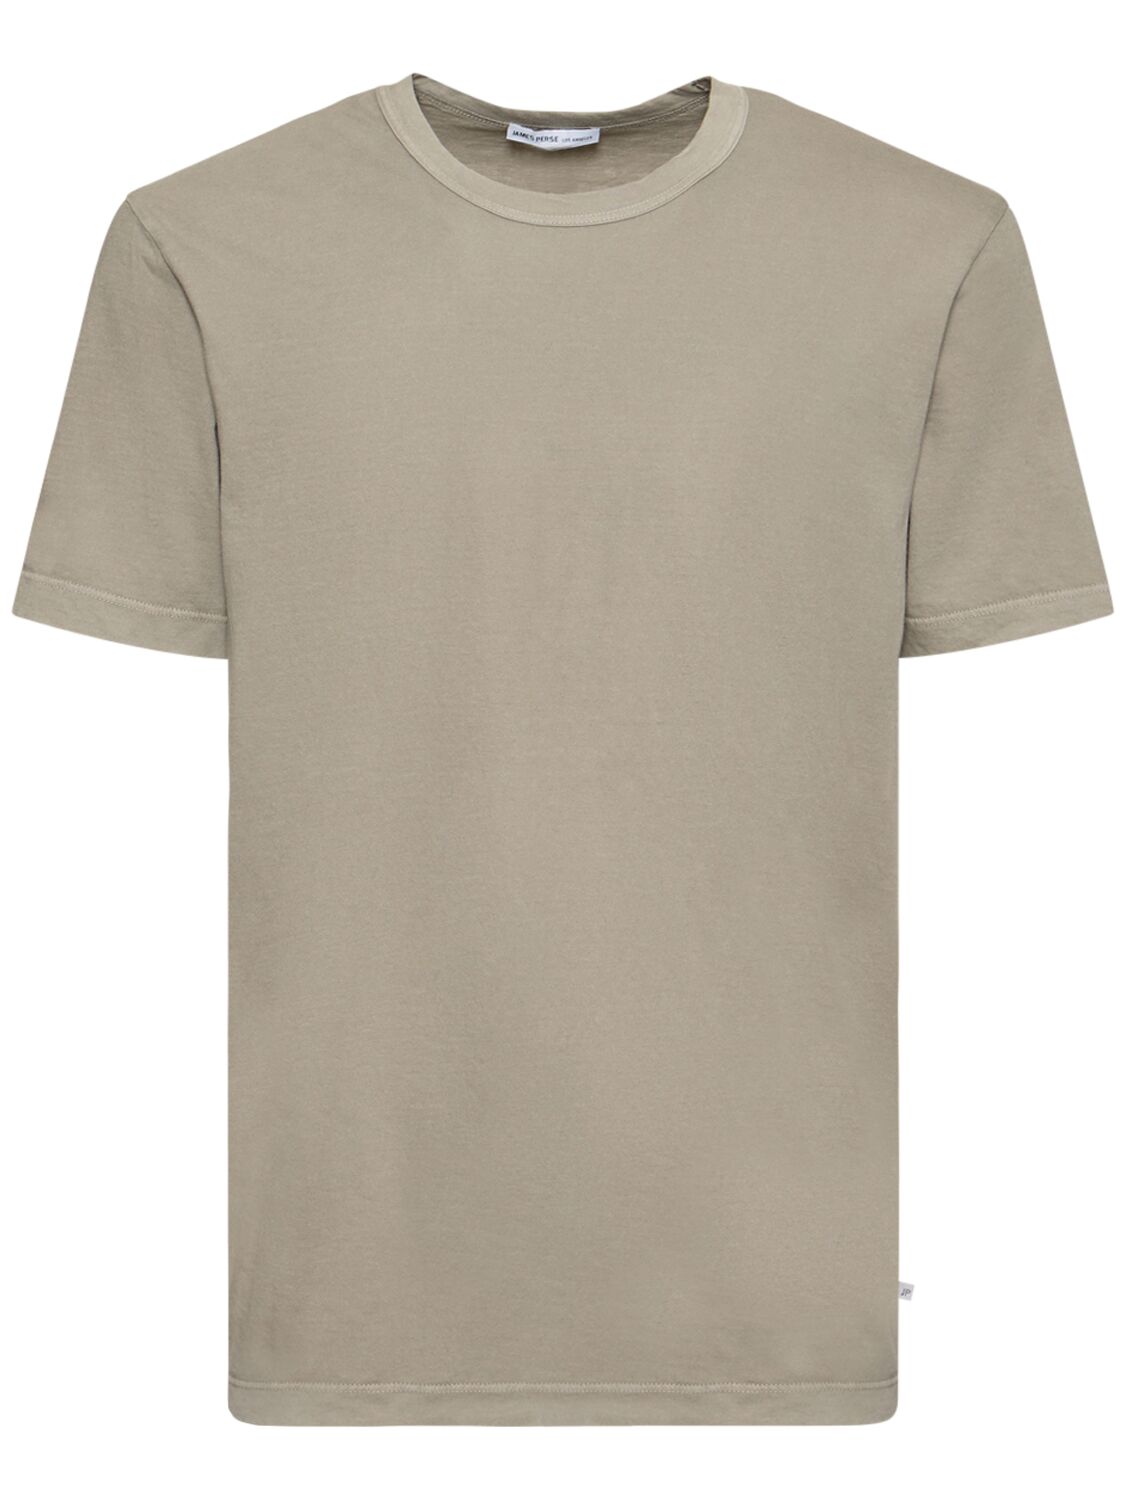 James Perse Lightweight Cotton Jersey T-shirt In Beige